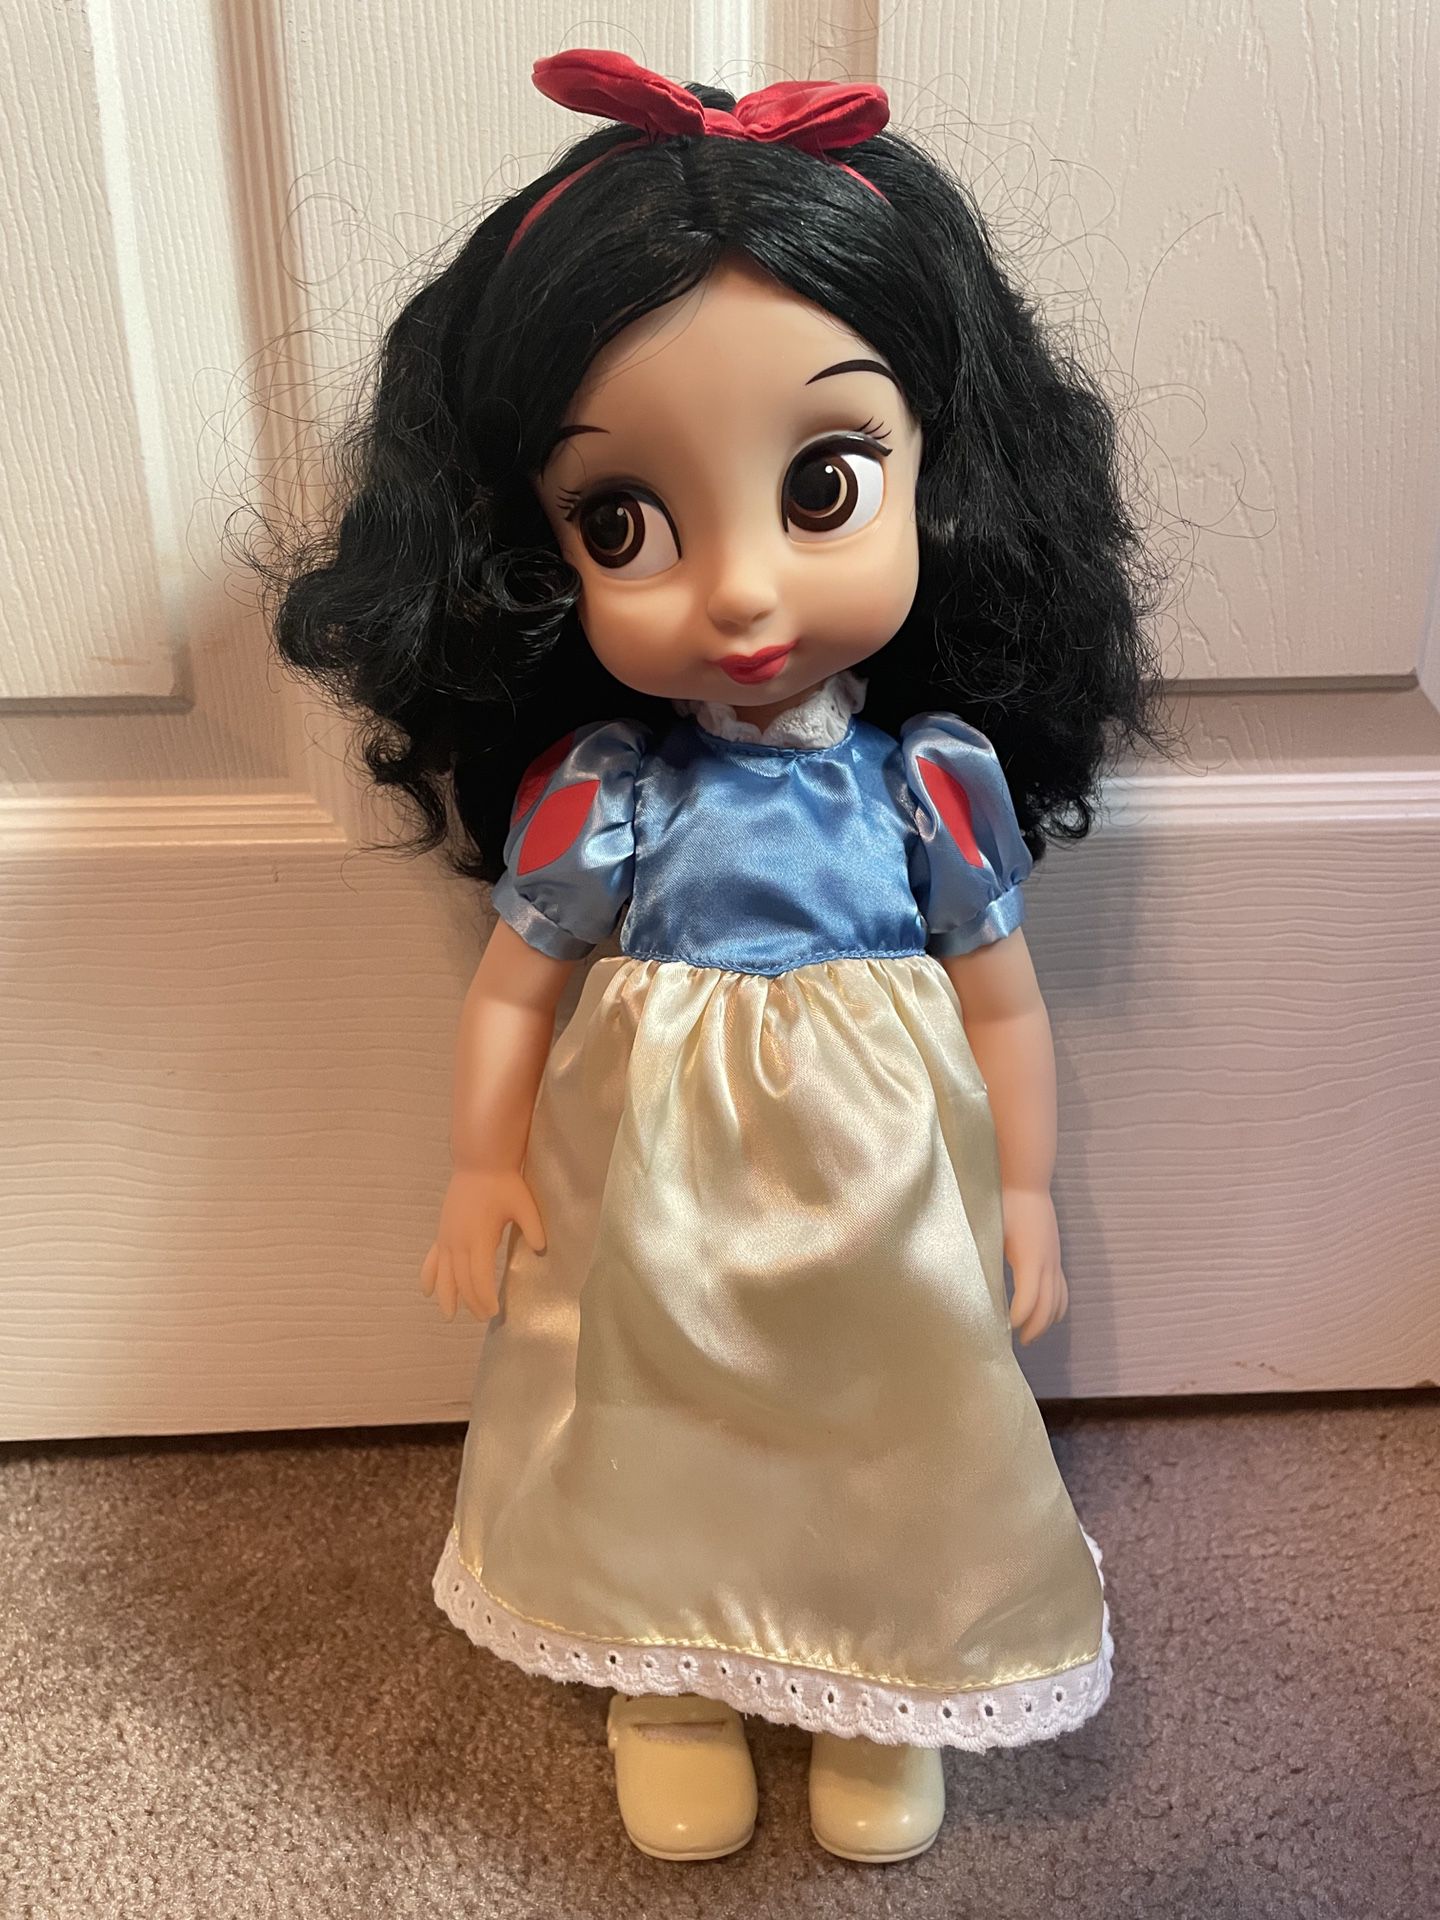 Snow White Disney Animators Doll for Sale in Tucson, AZ - OfferUp